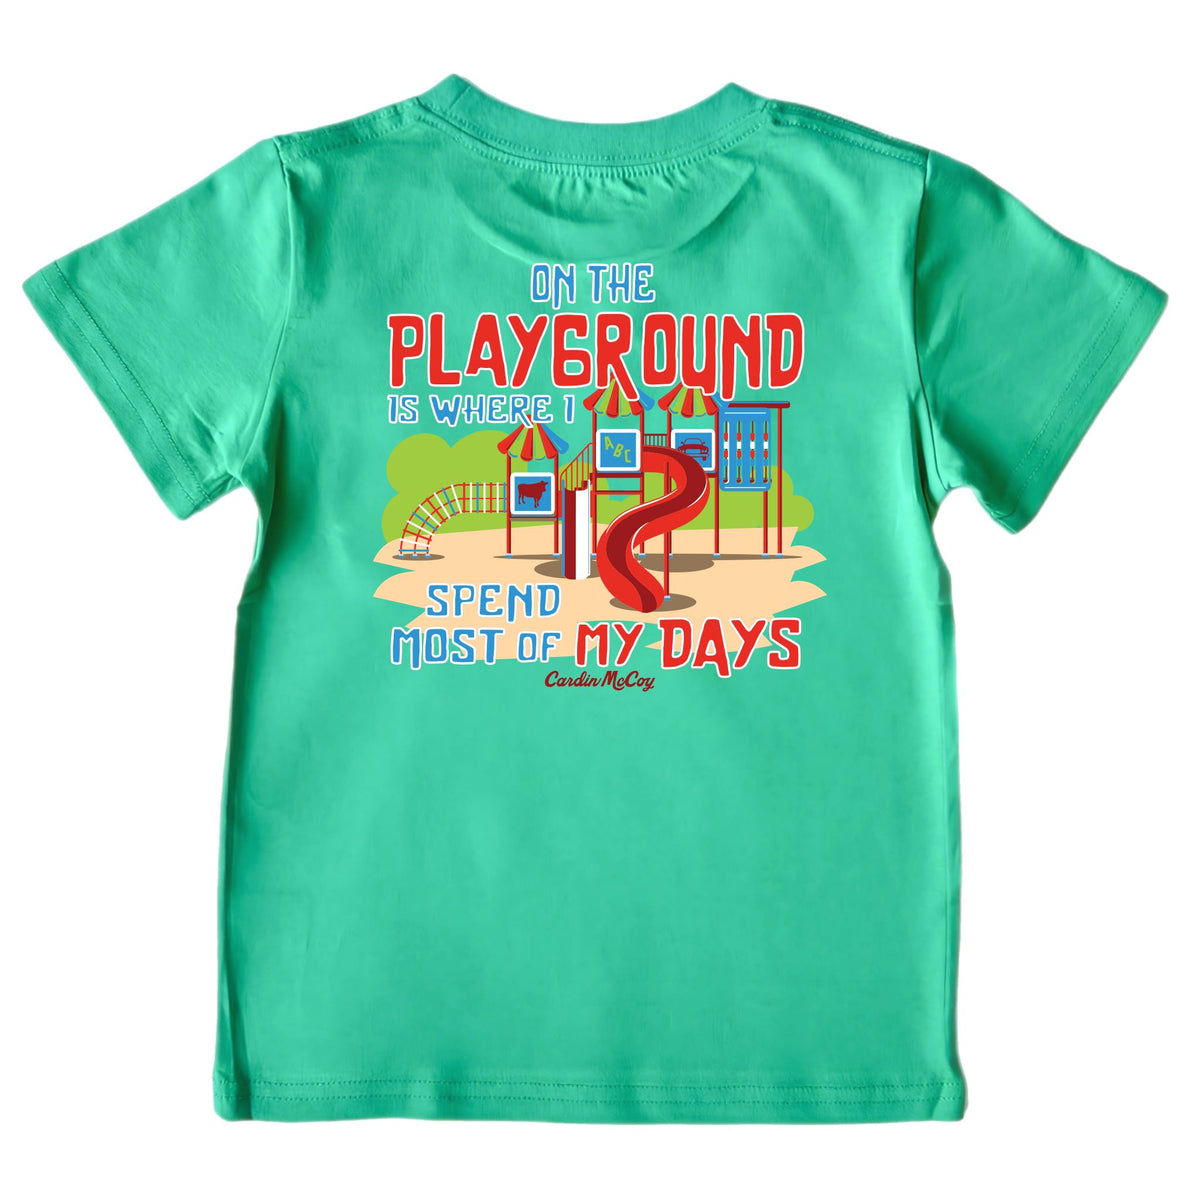 Boys' On the Playground Short-Sleeve Tee Short Sleeve T-Shirt Cardin McCoy Green XXS (2/3) Pocket